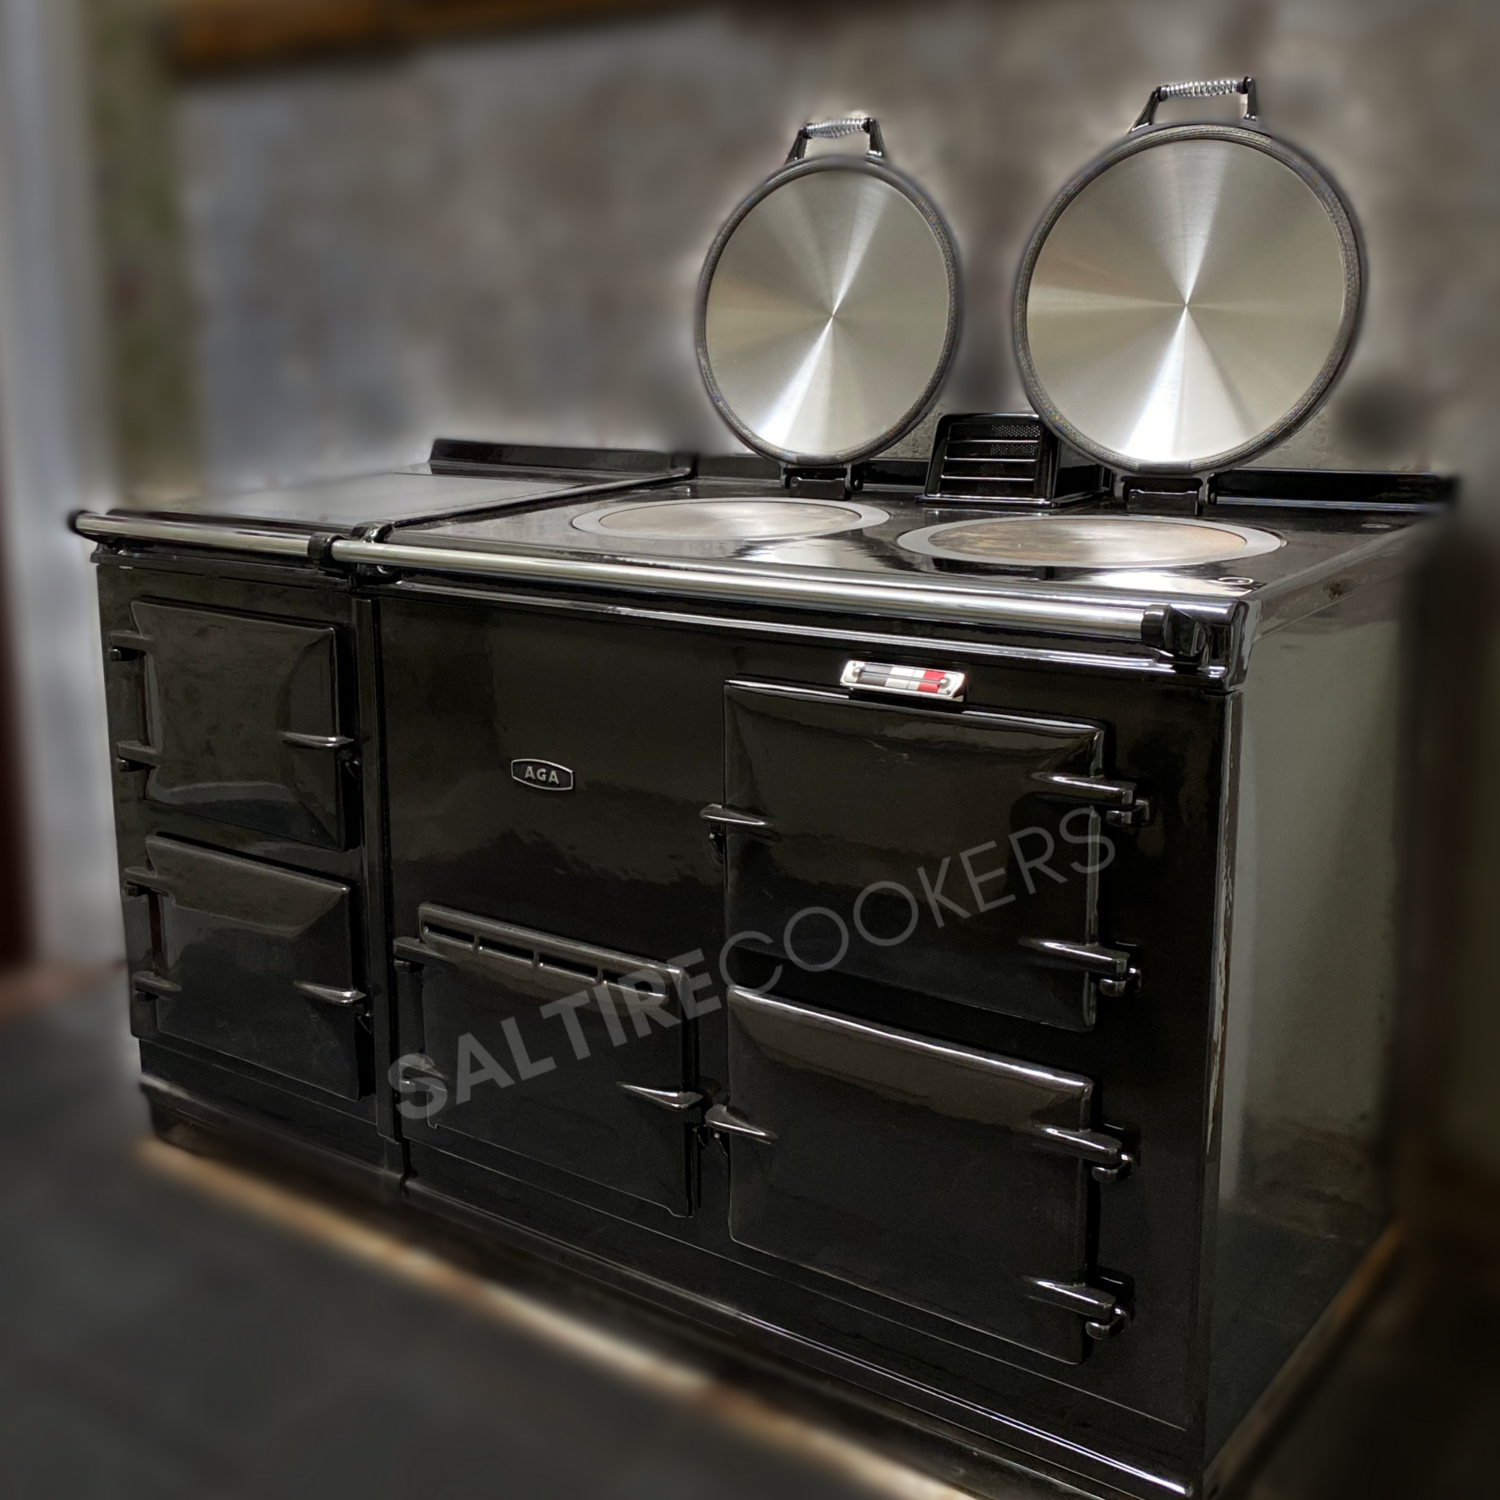 Reconditioned 4 Oven Oil Aga Cooker (Black)